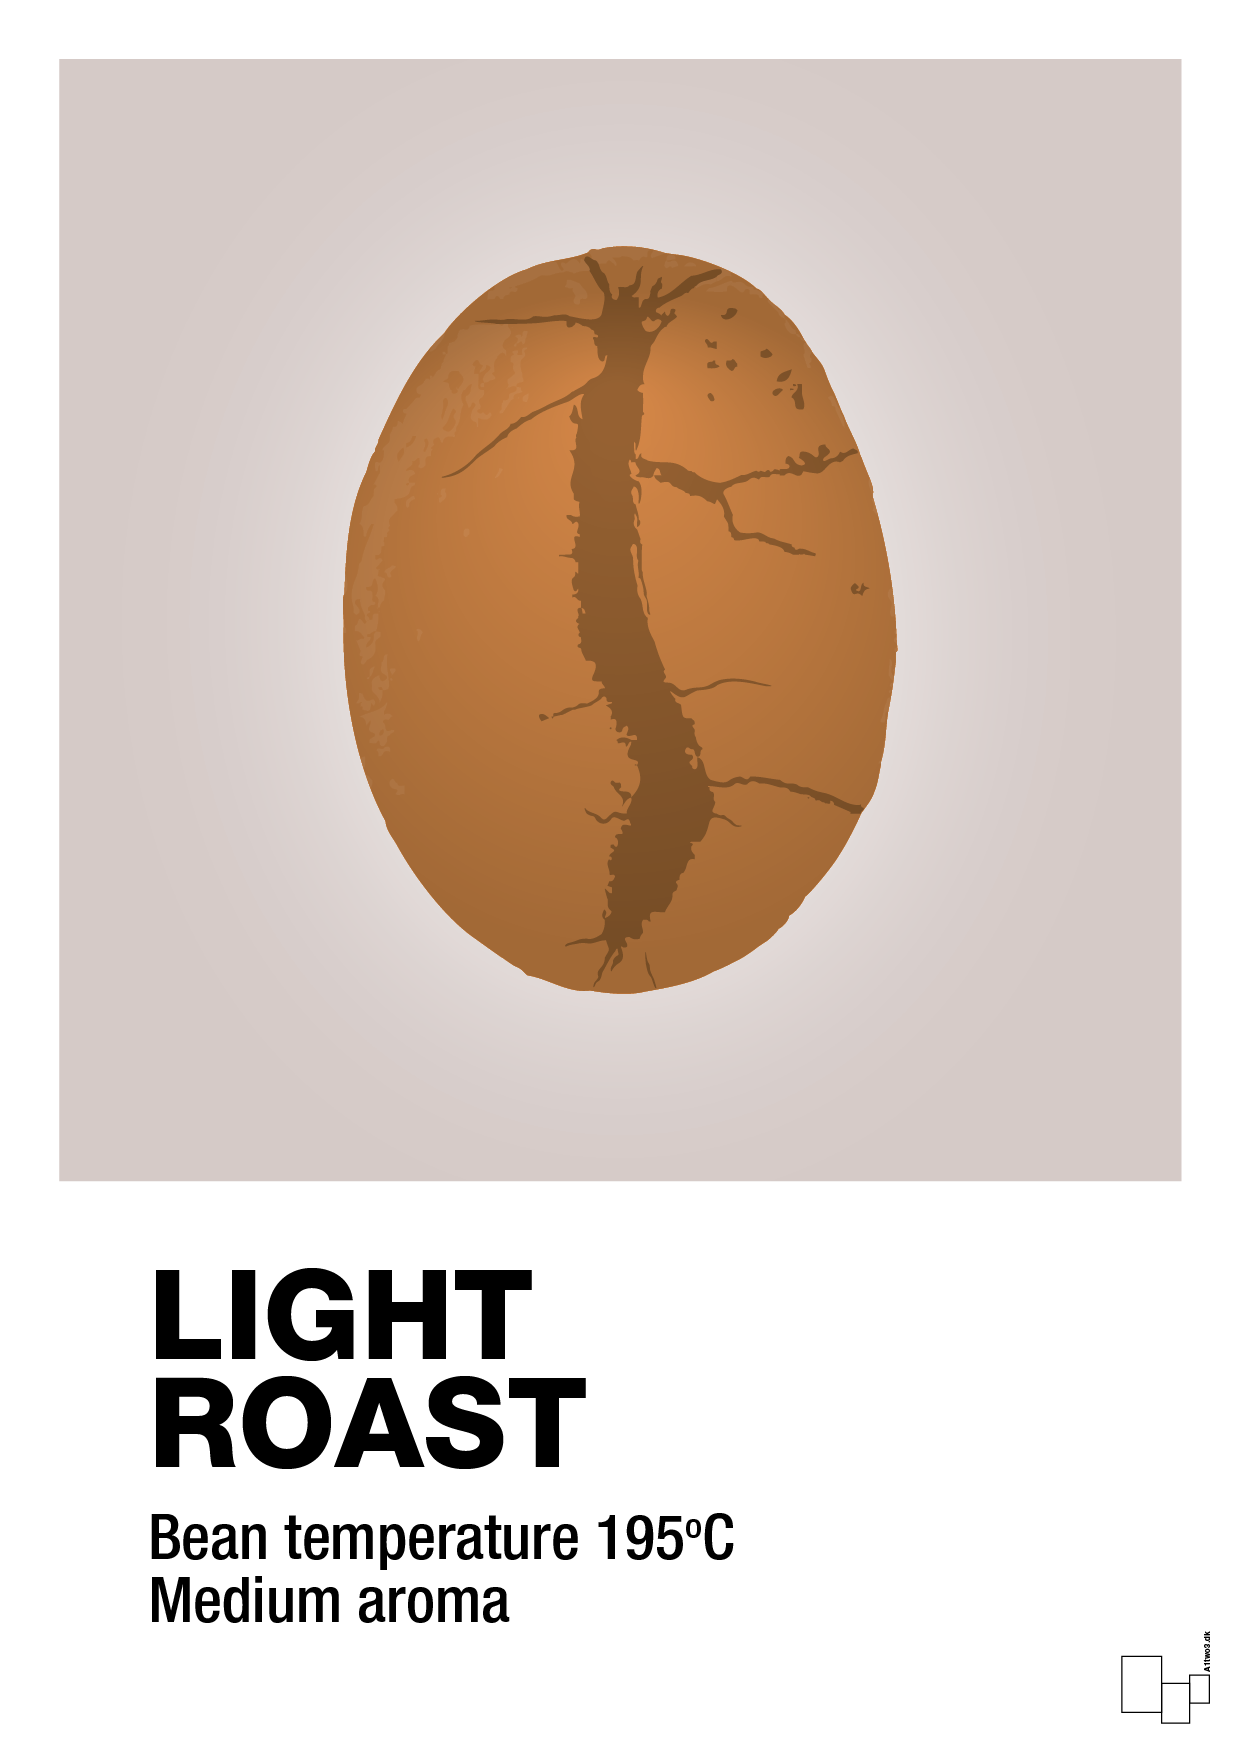 light roast - Plakat med Mad & Drikke i Broken Beige